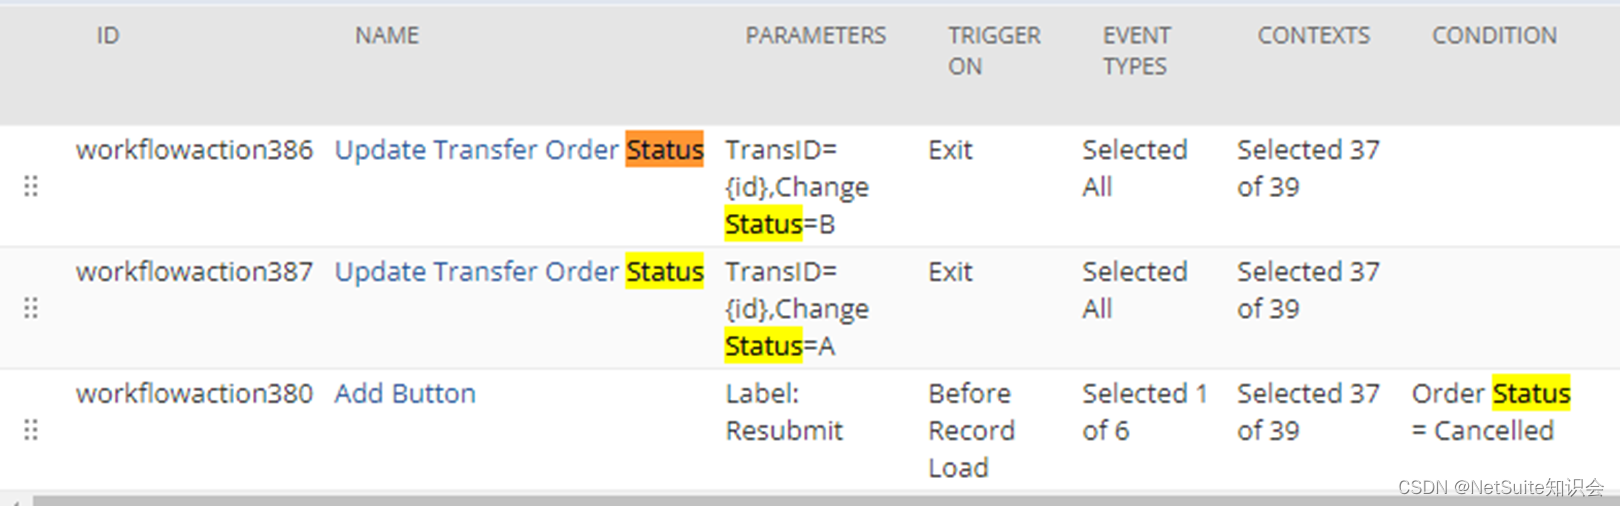 NetSuite Approval Status与Order Status辨析